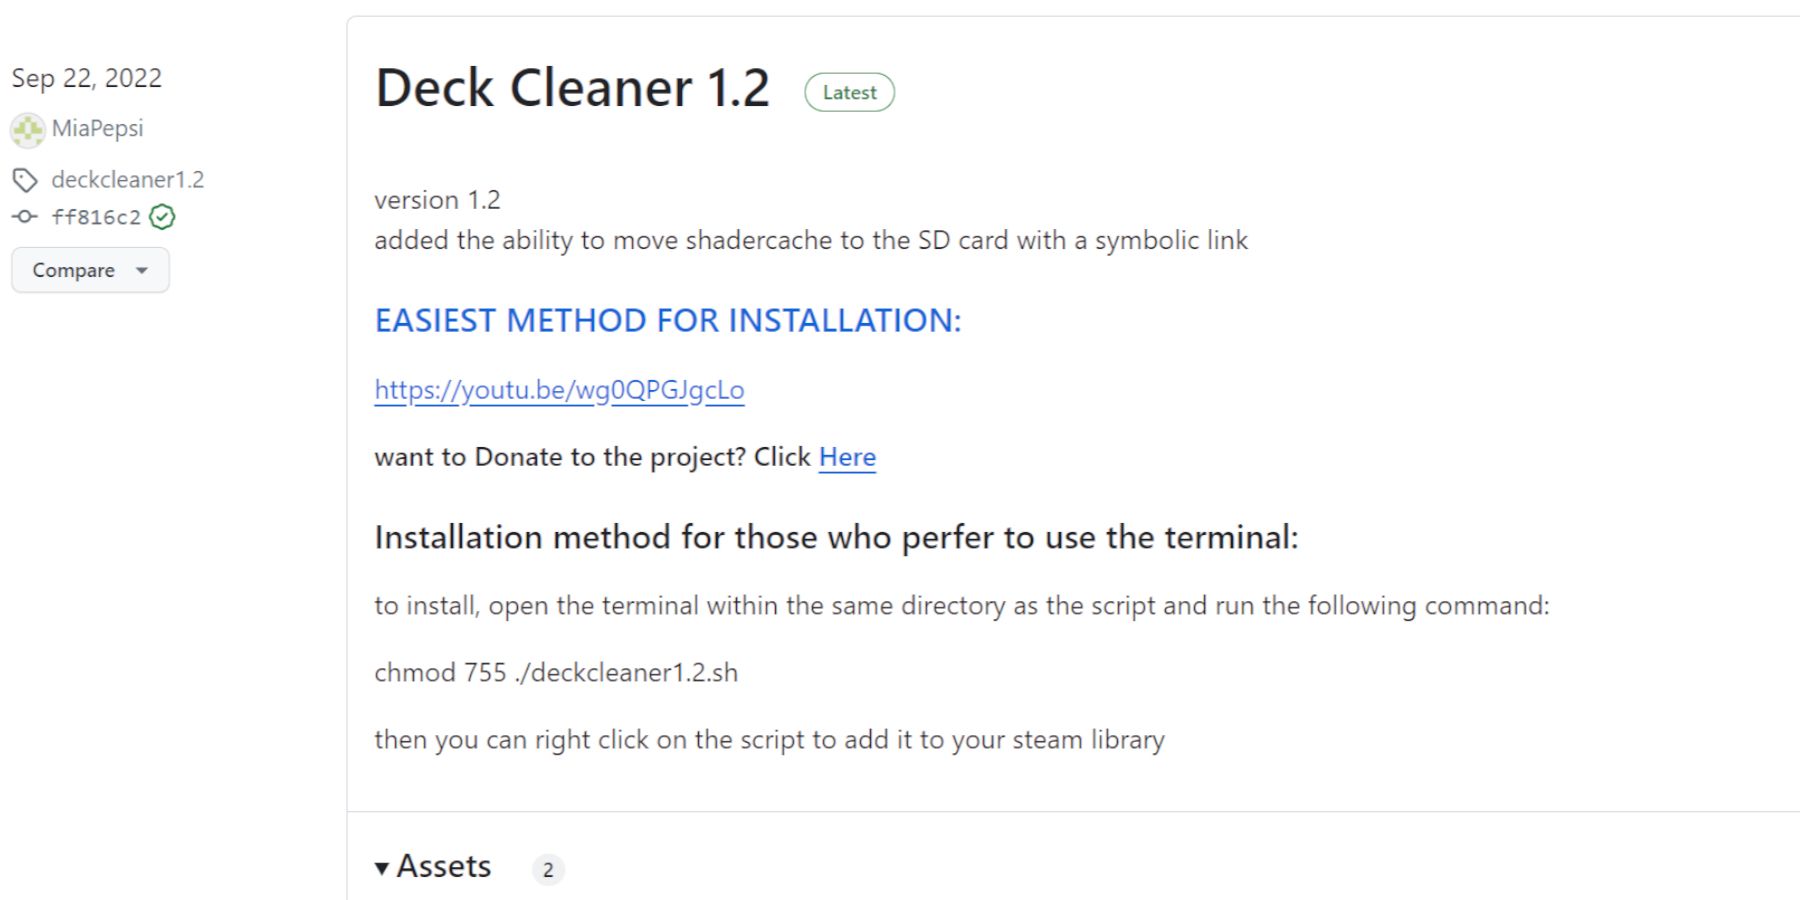 Deck Cleaner 1.2